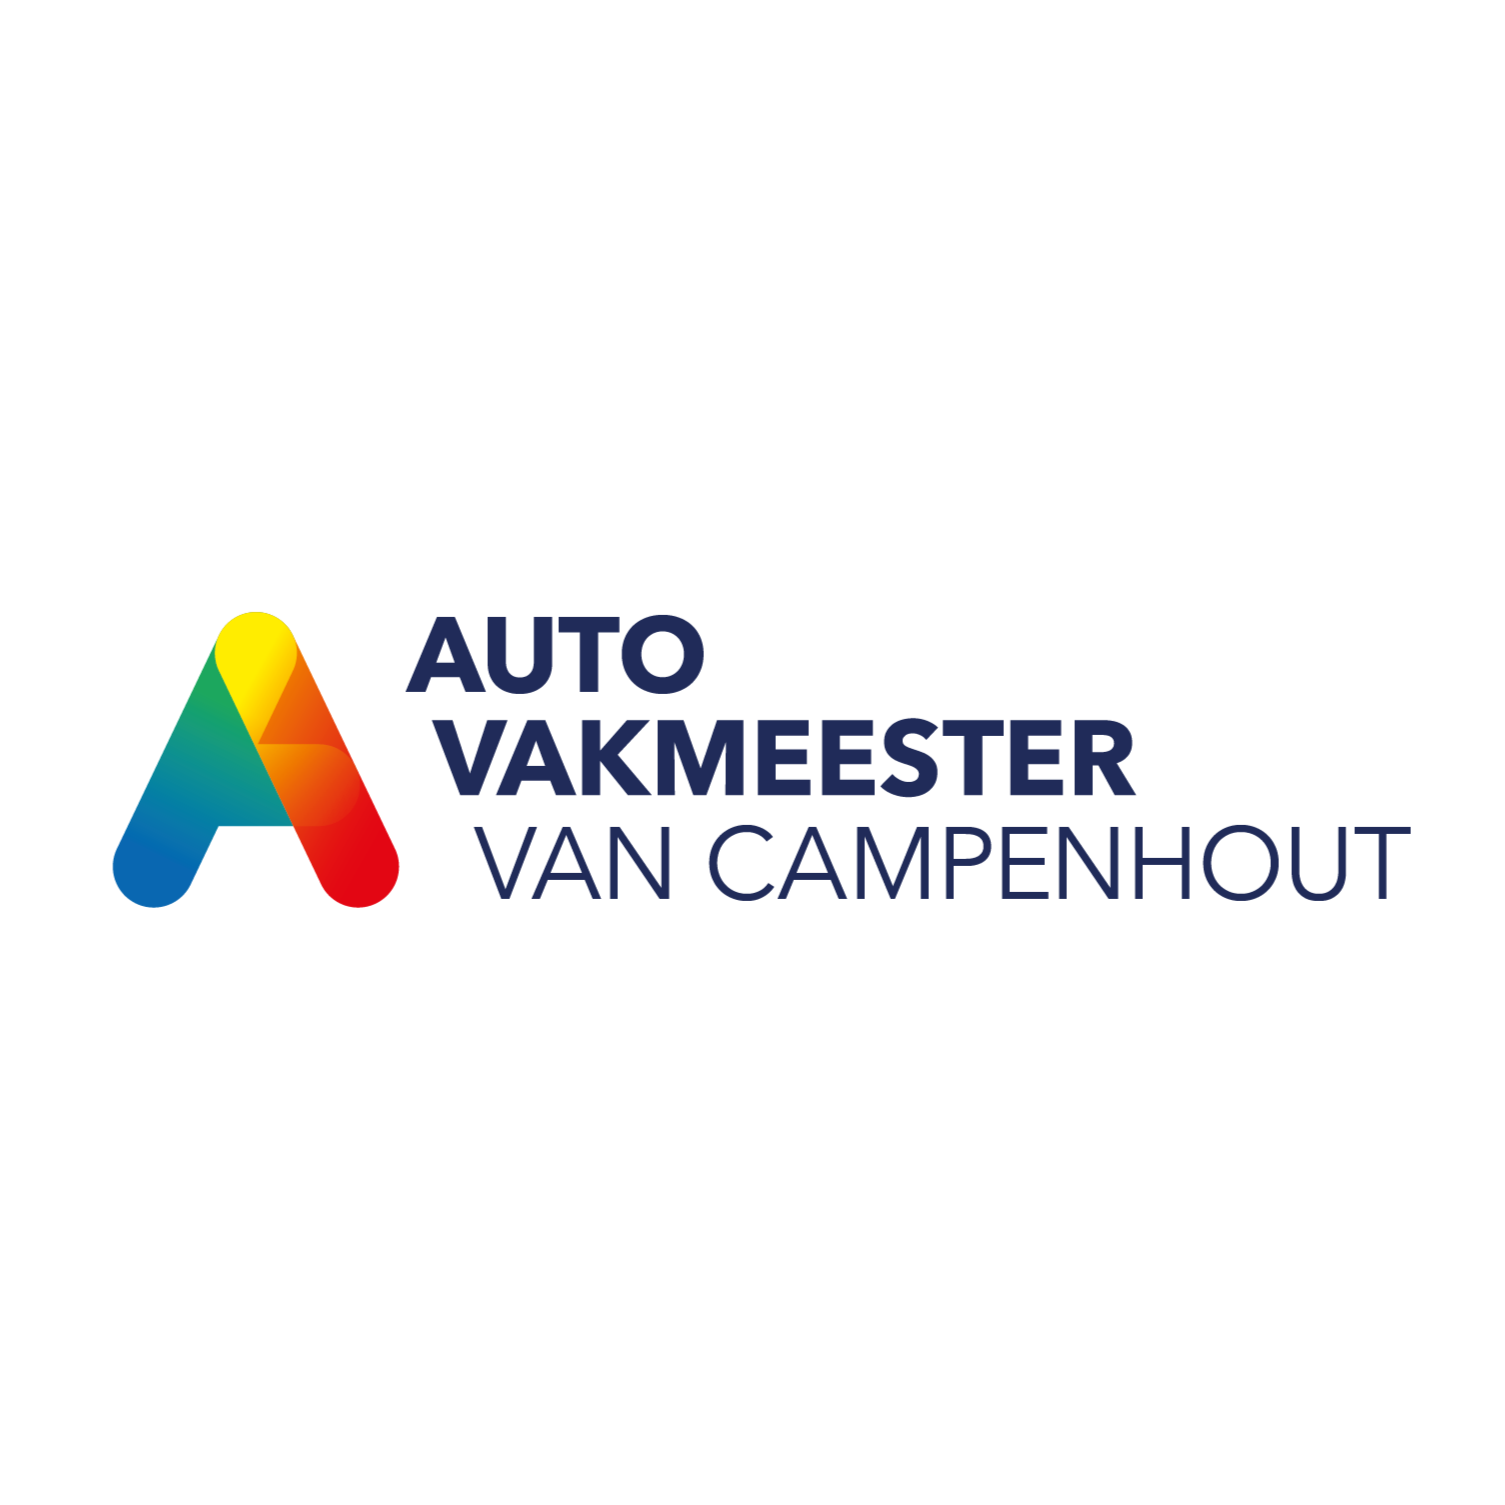 Autovakmeester van Campenhout - Car Dealer - Breda - 076 522 5507 Netherlands | ShowMeLocal.com